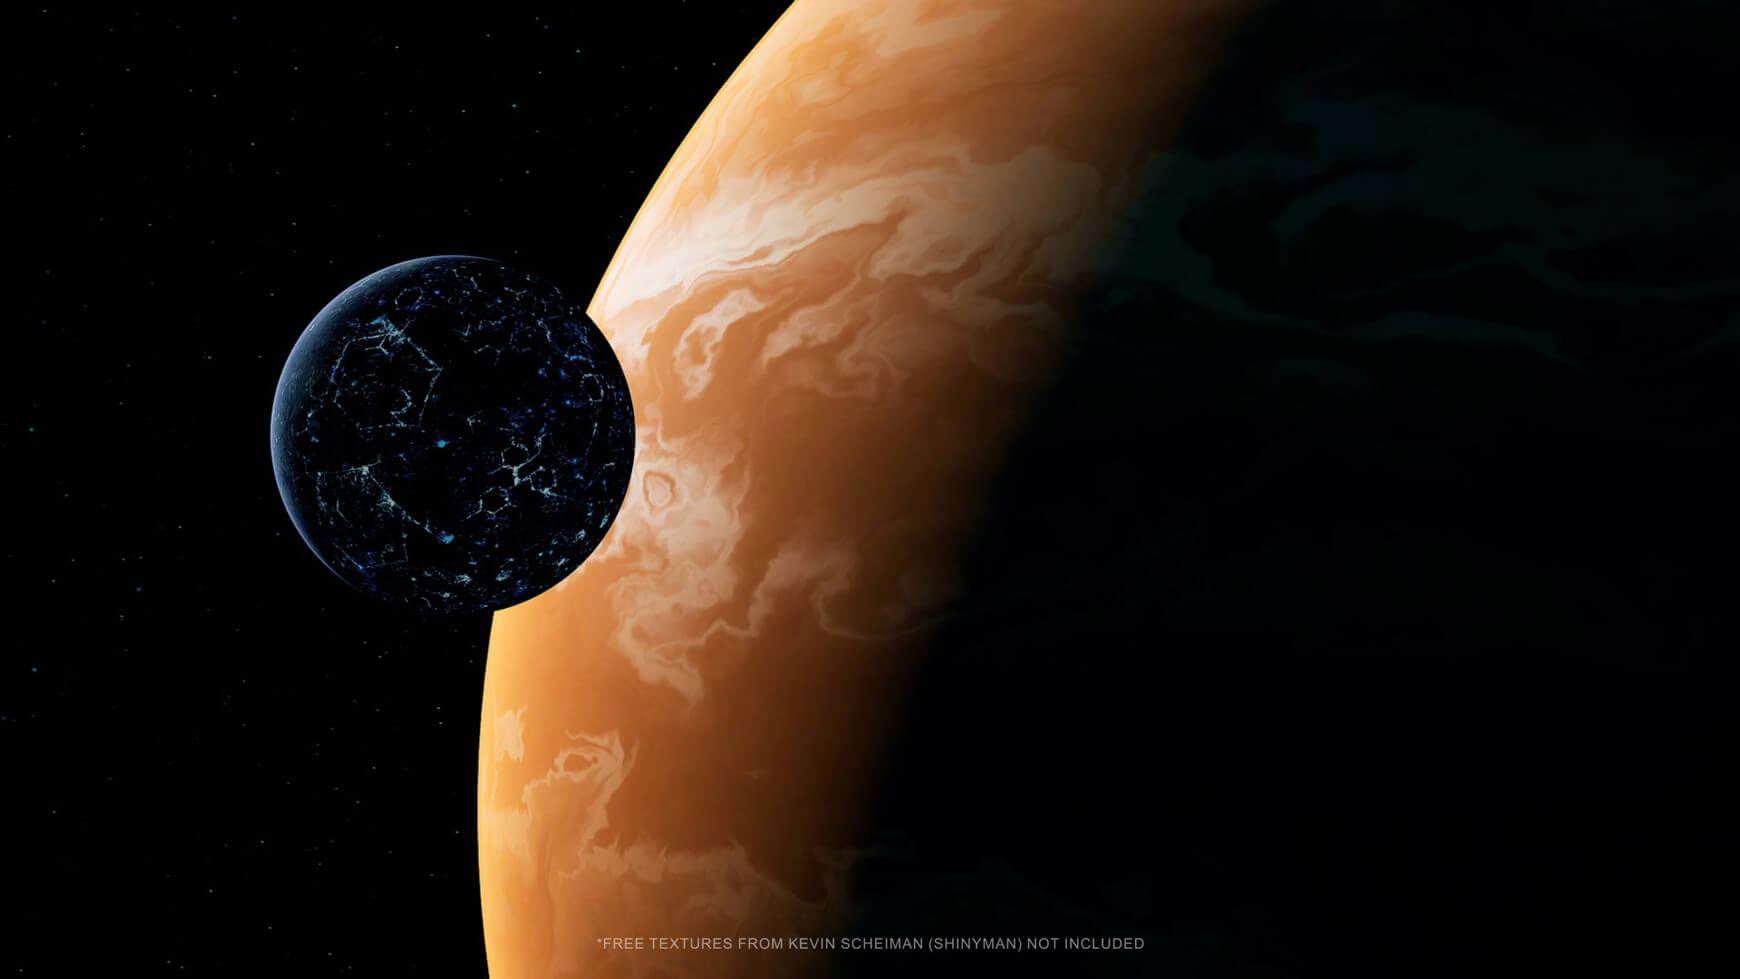 Free Unreal Engine UE Earth Globe Planet Blueprint